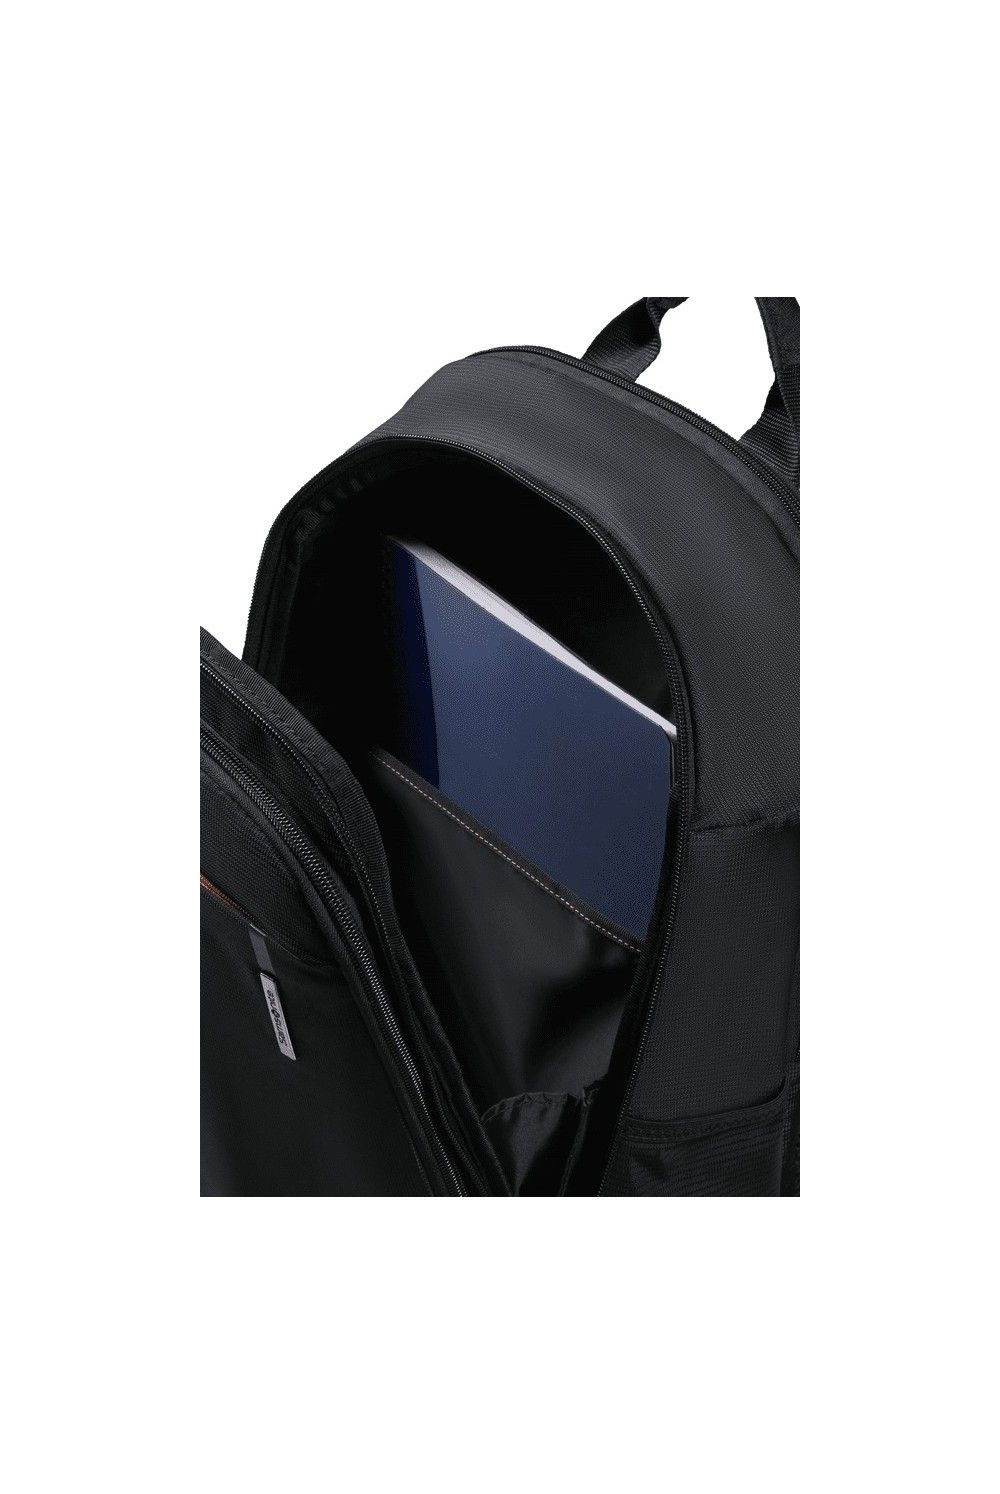 Samsonite Laptop Backpack Network 4 15 pouces black